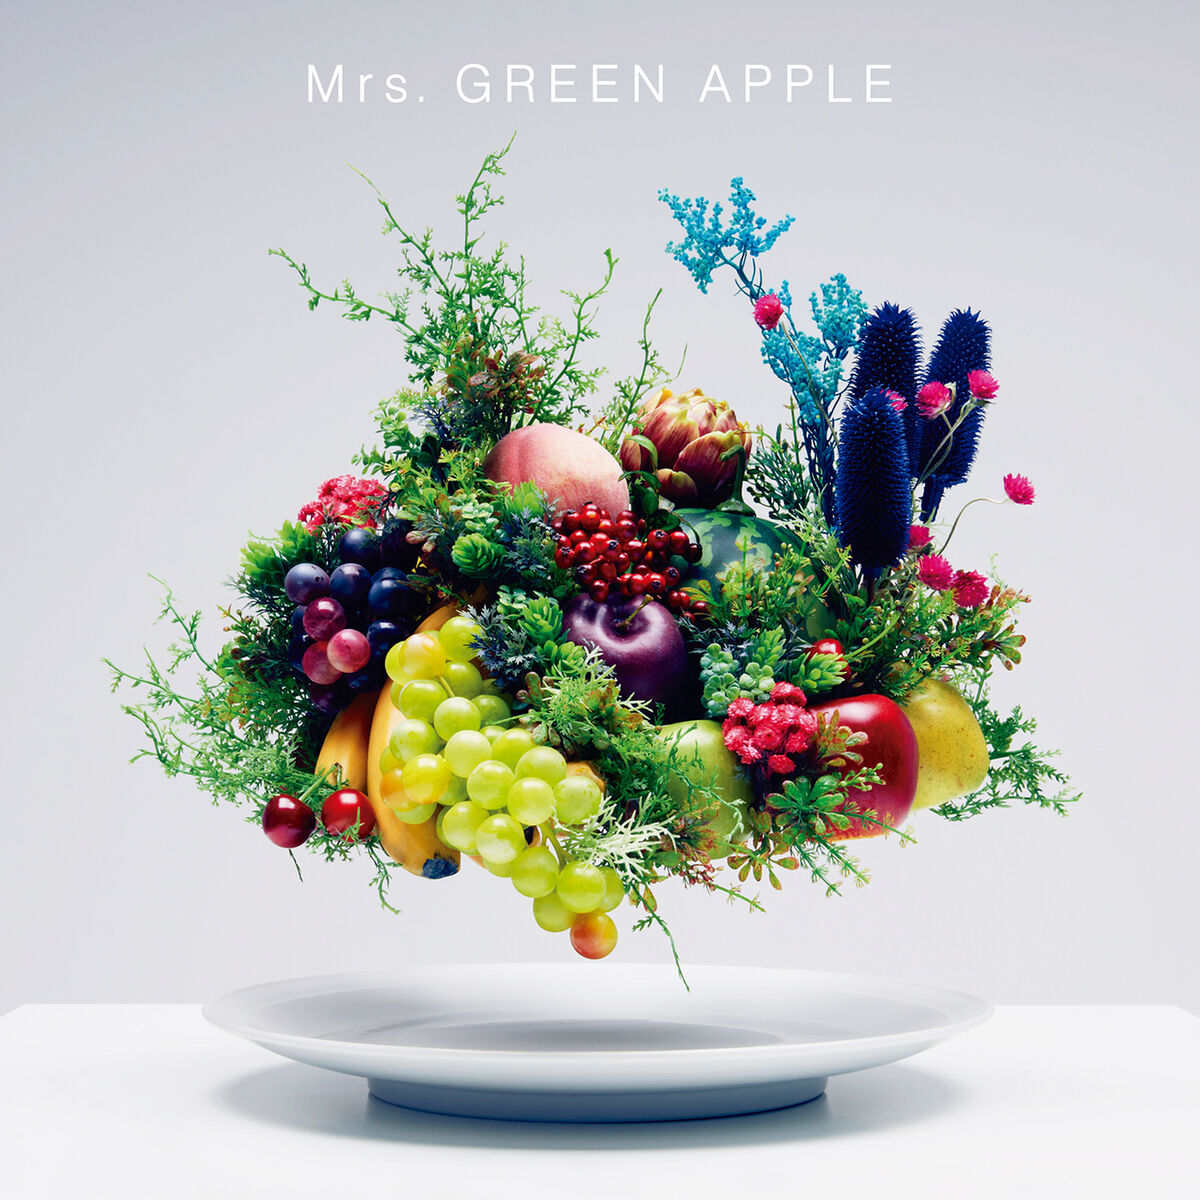 Mrs. GREEN APPLE: albums, songs, playlists | Listen on Deezer